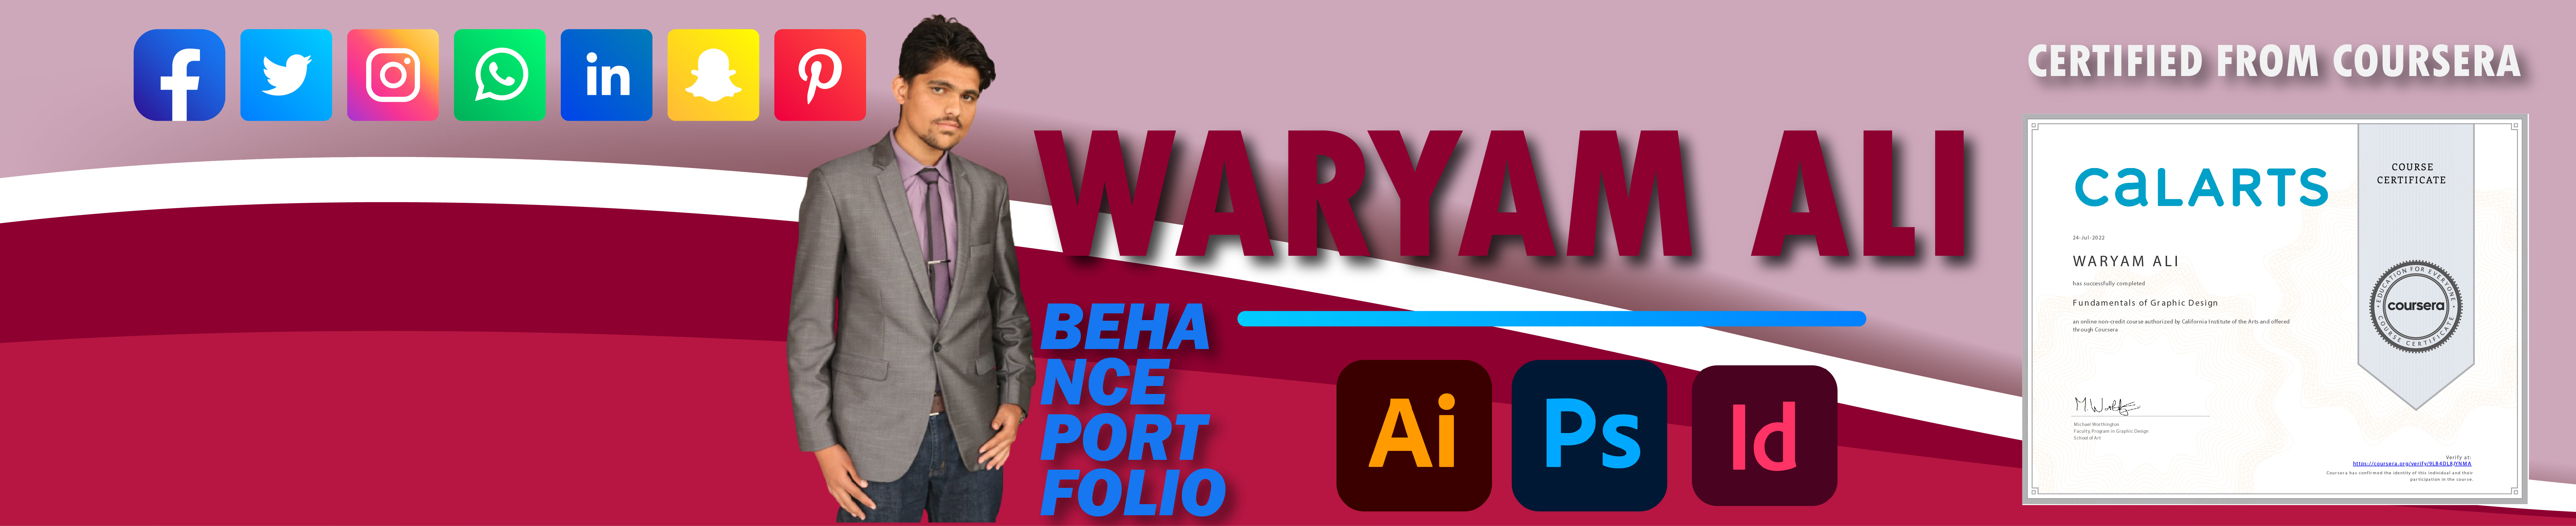 Waryam Ali's profile banner